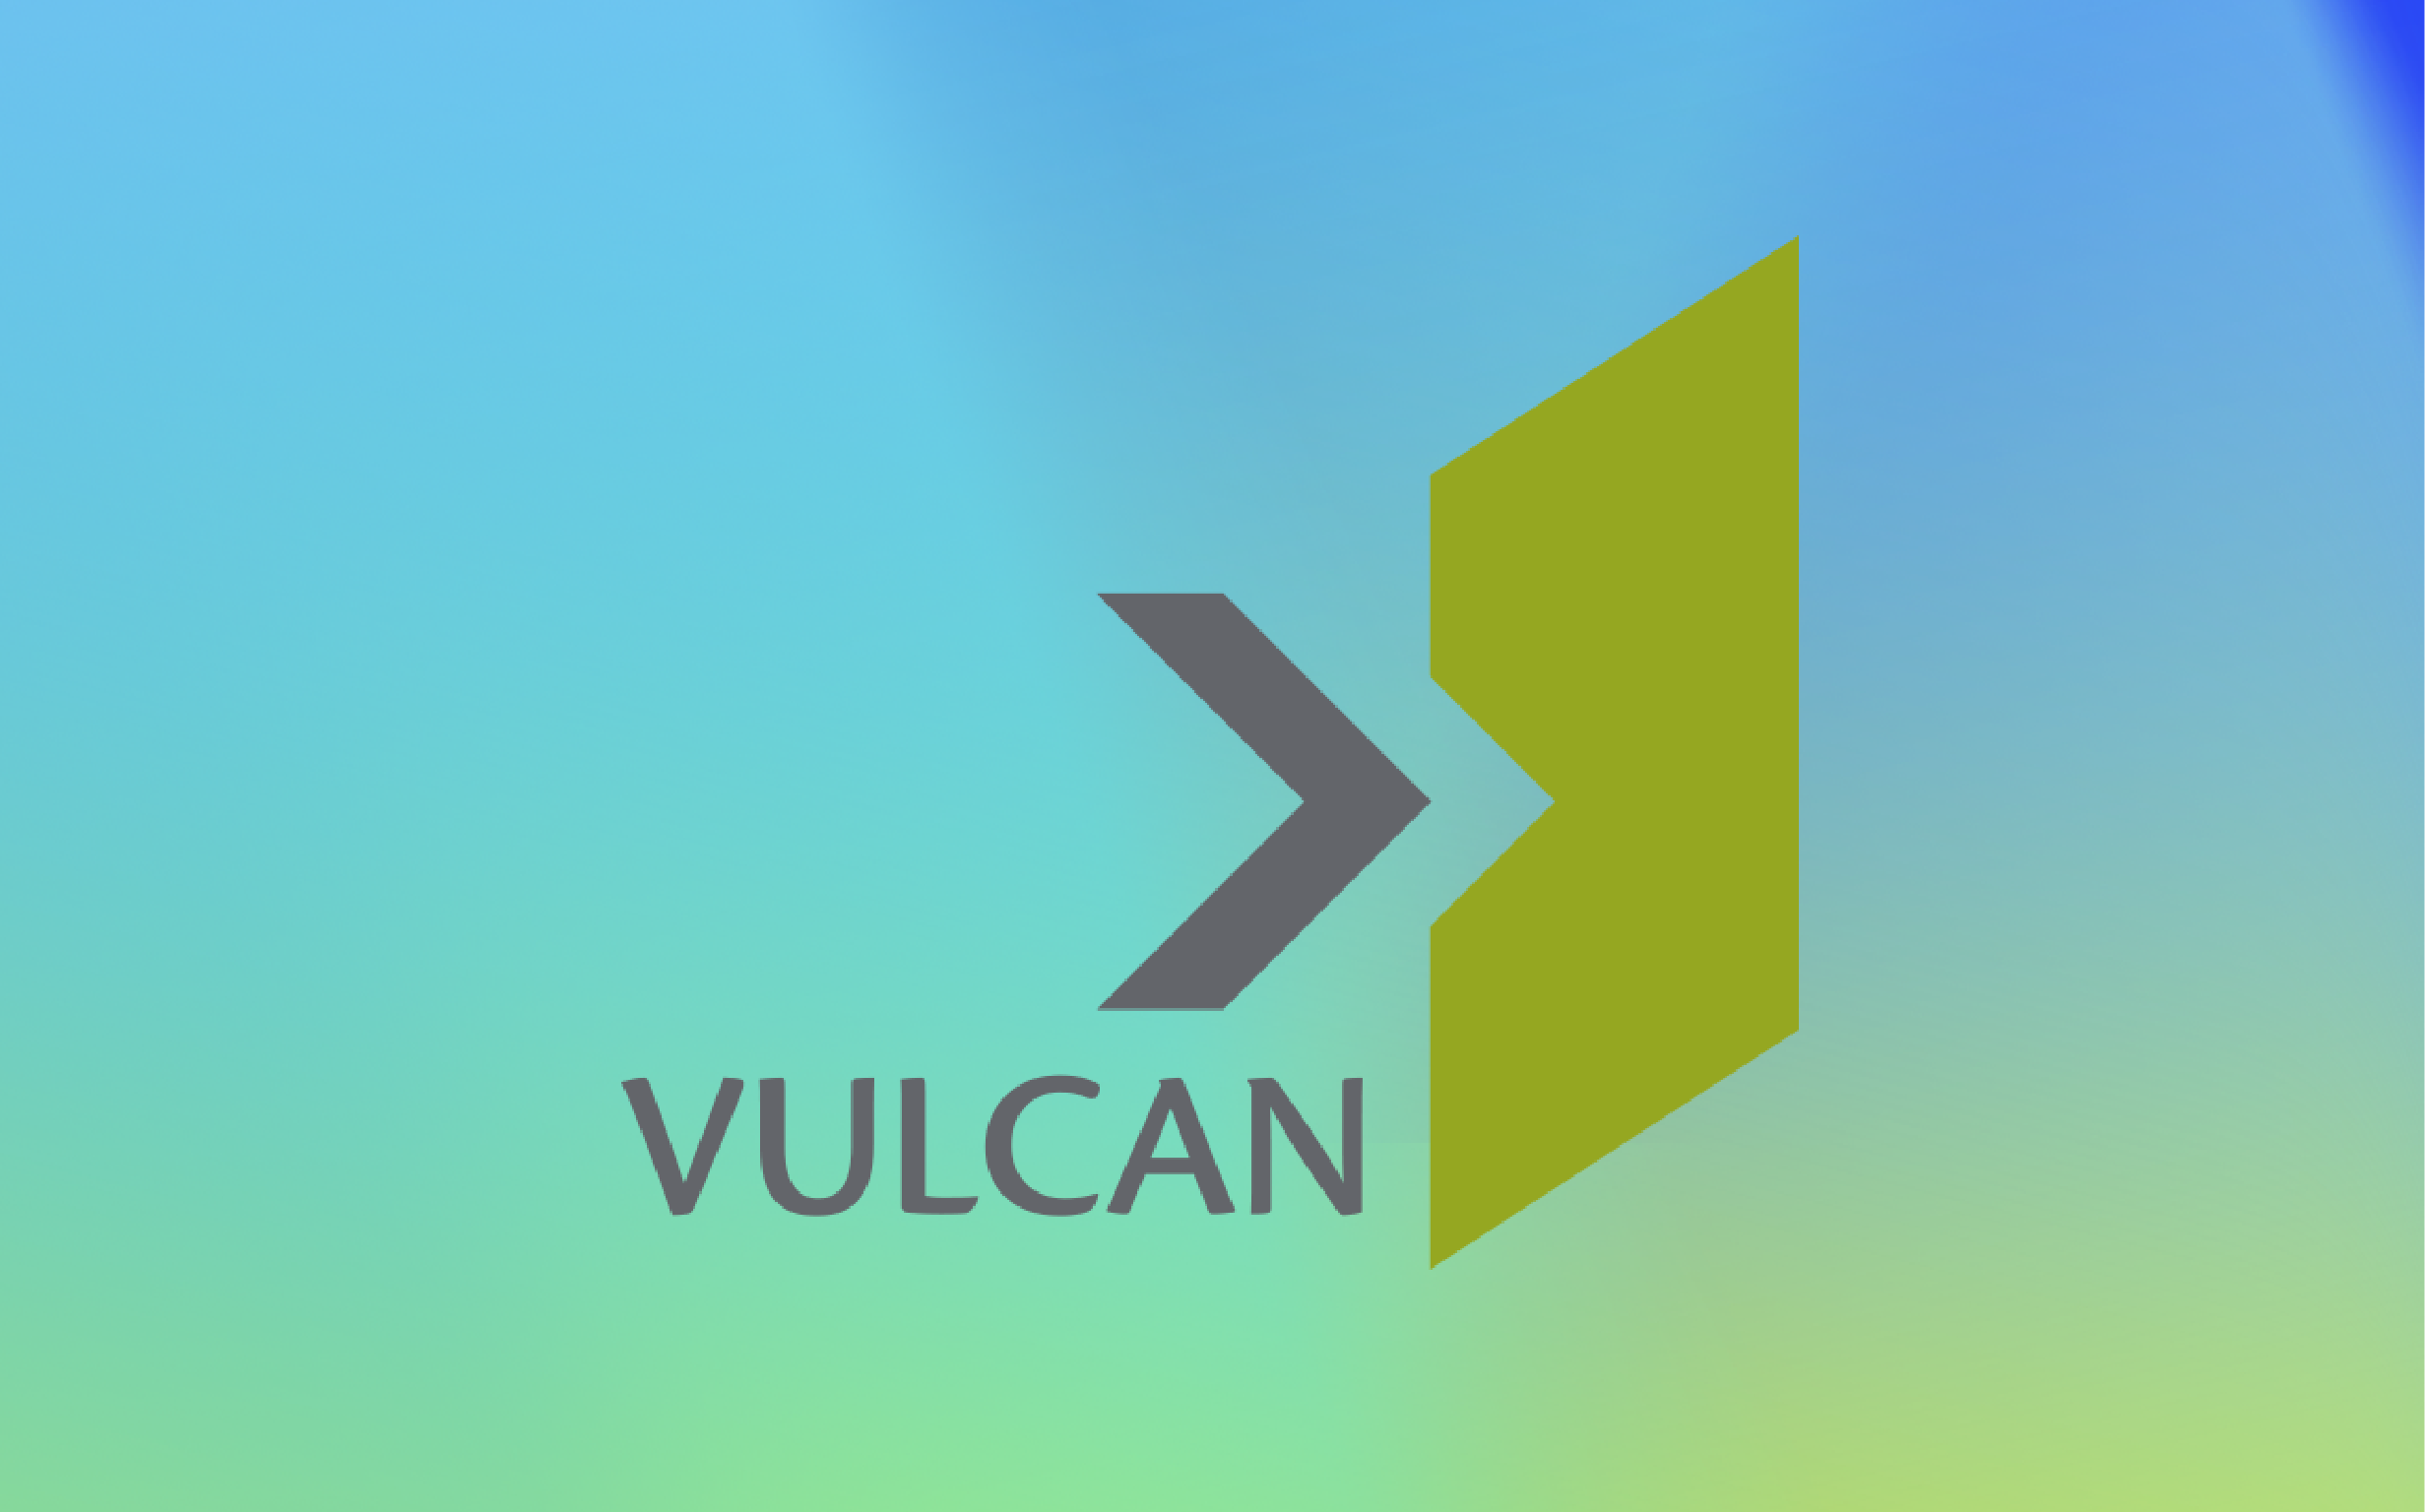 vulcan logo